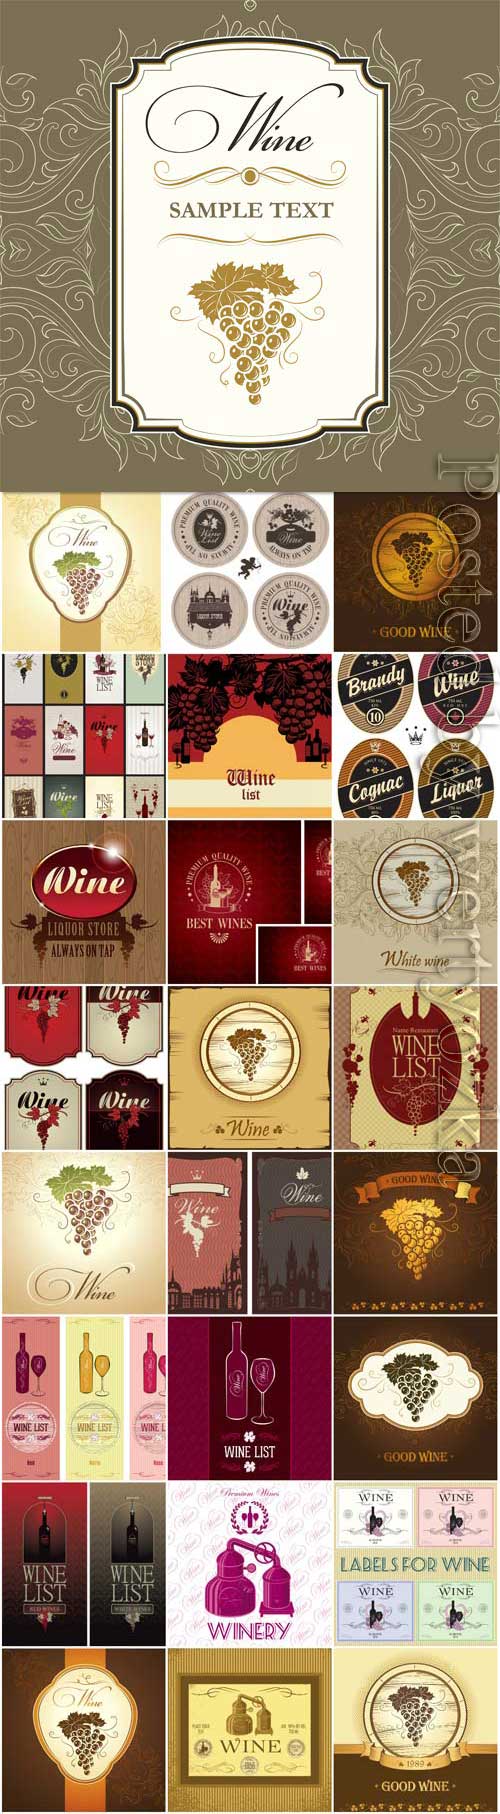 Retro wine labels for design in vector